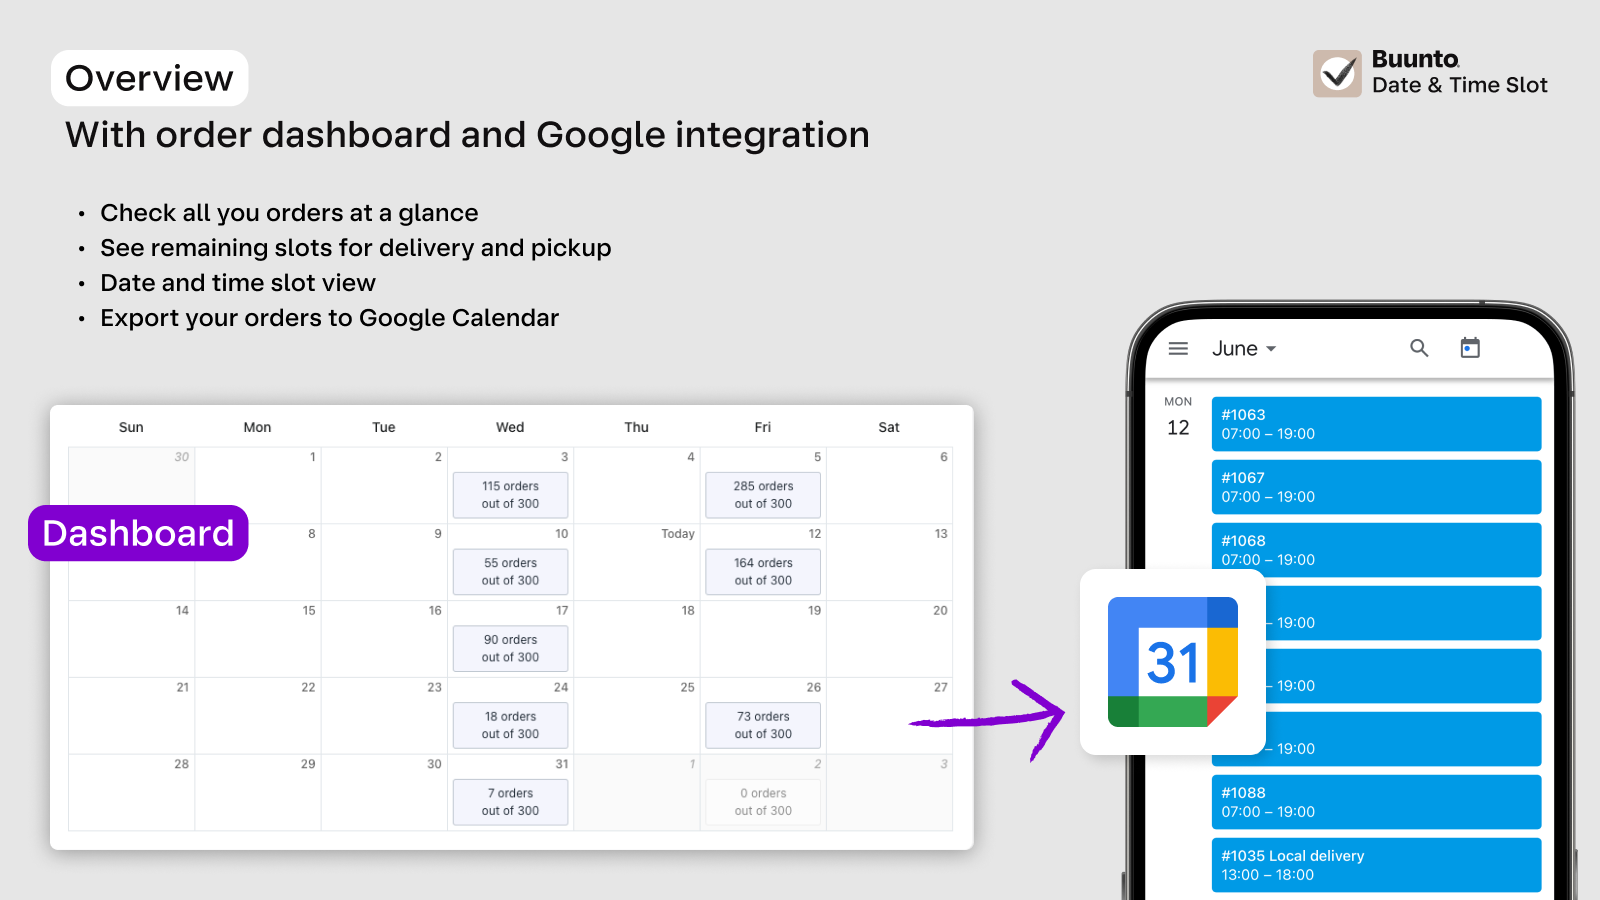 Order dashboard and Google calendar integration